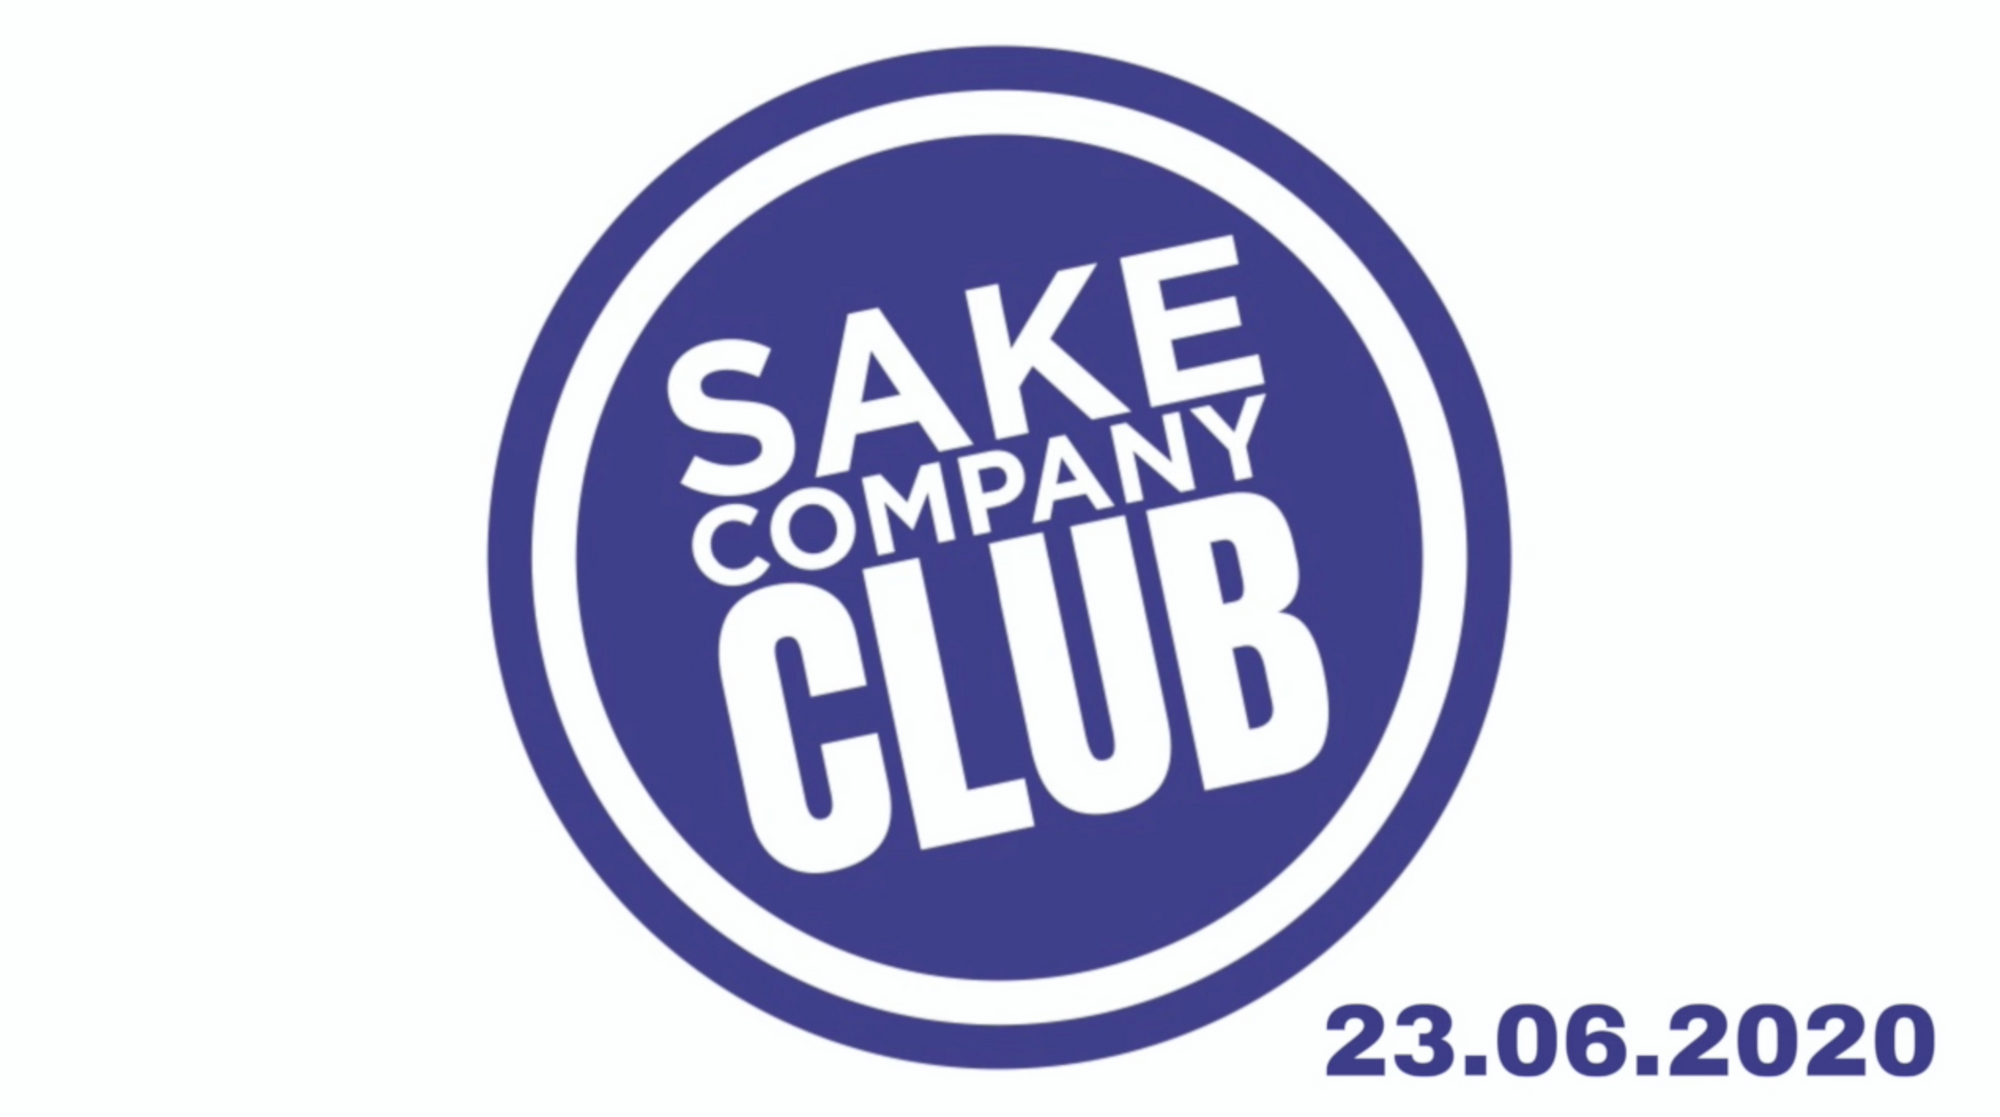 Sake Company Club